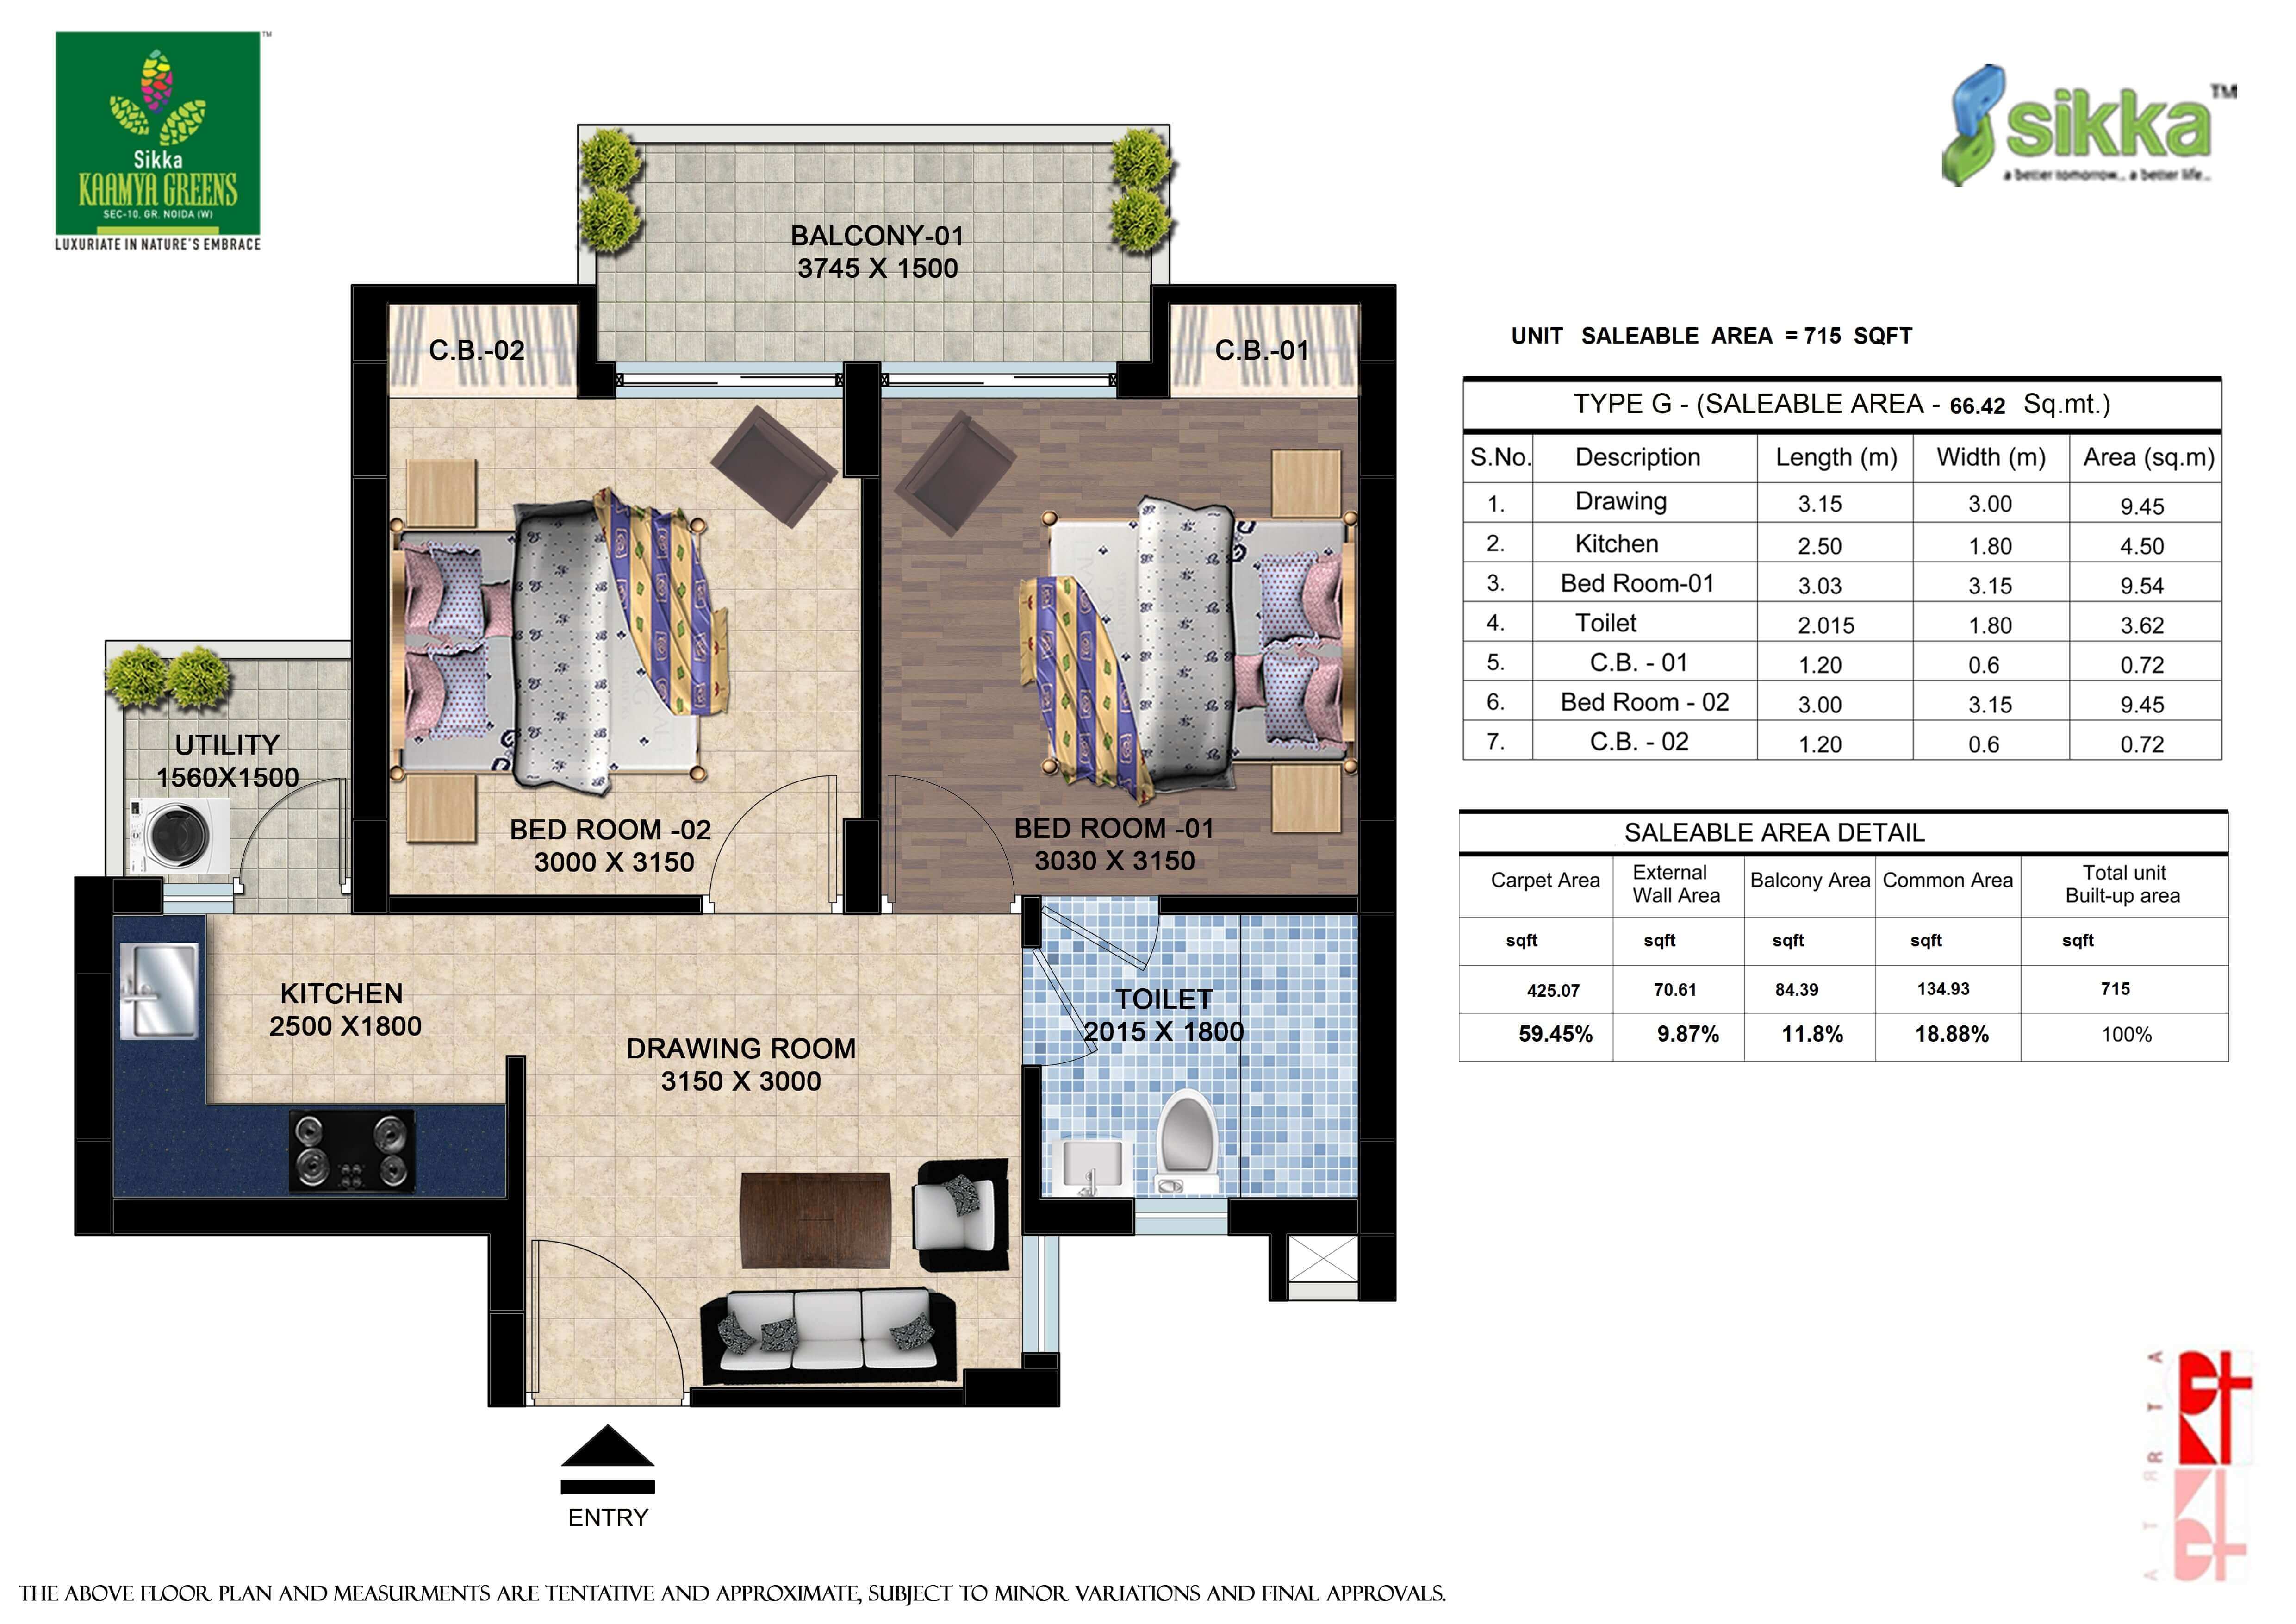 Kaamya Greens 2BHK Floor Plan - Area : 715 SQFT